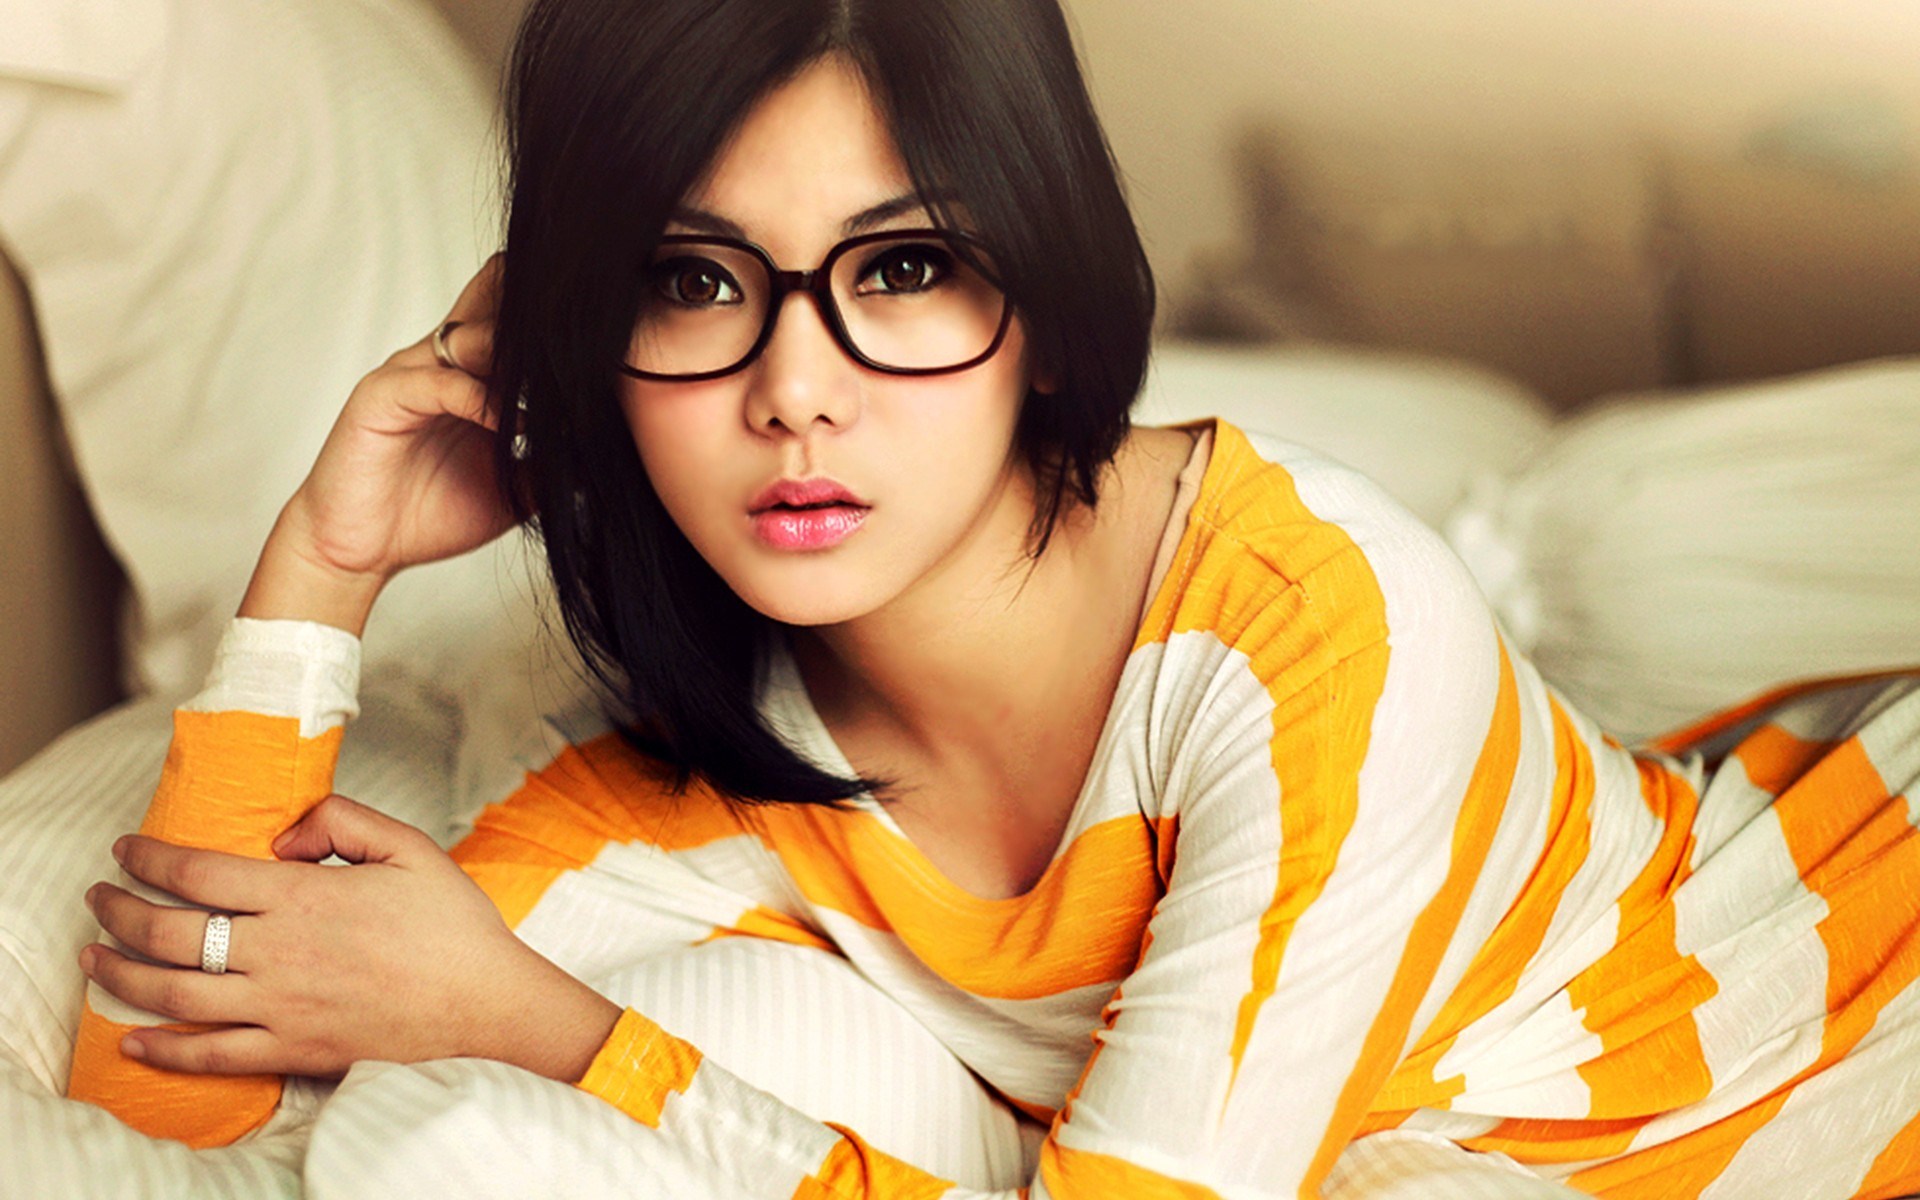 Brunette Glasses Beauty Model Fashion Photo